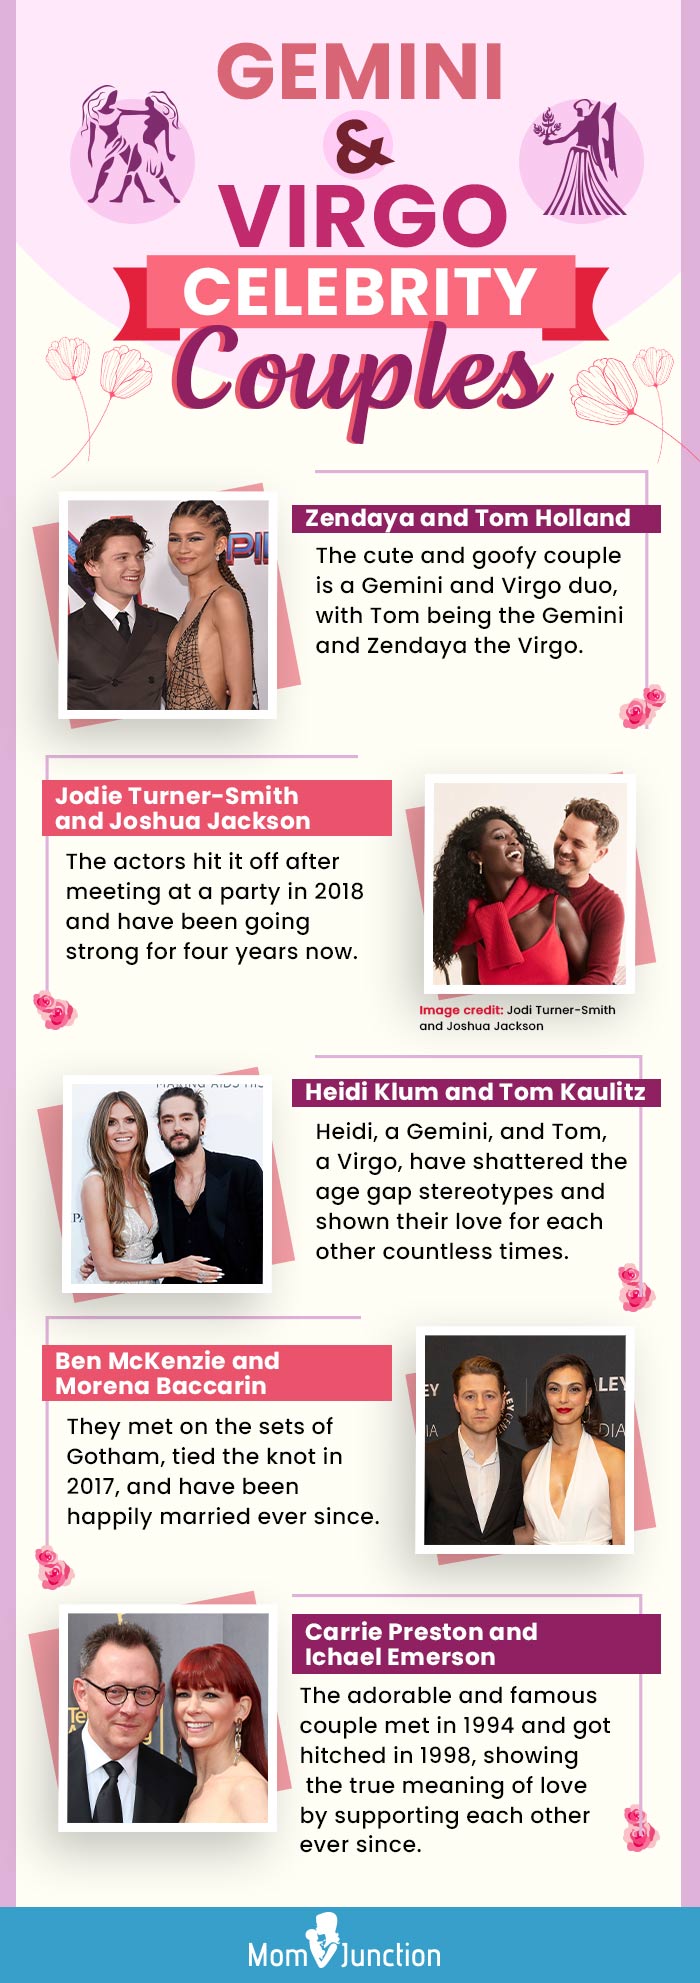 gemini and virgo celebrity couples (infographic)